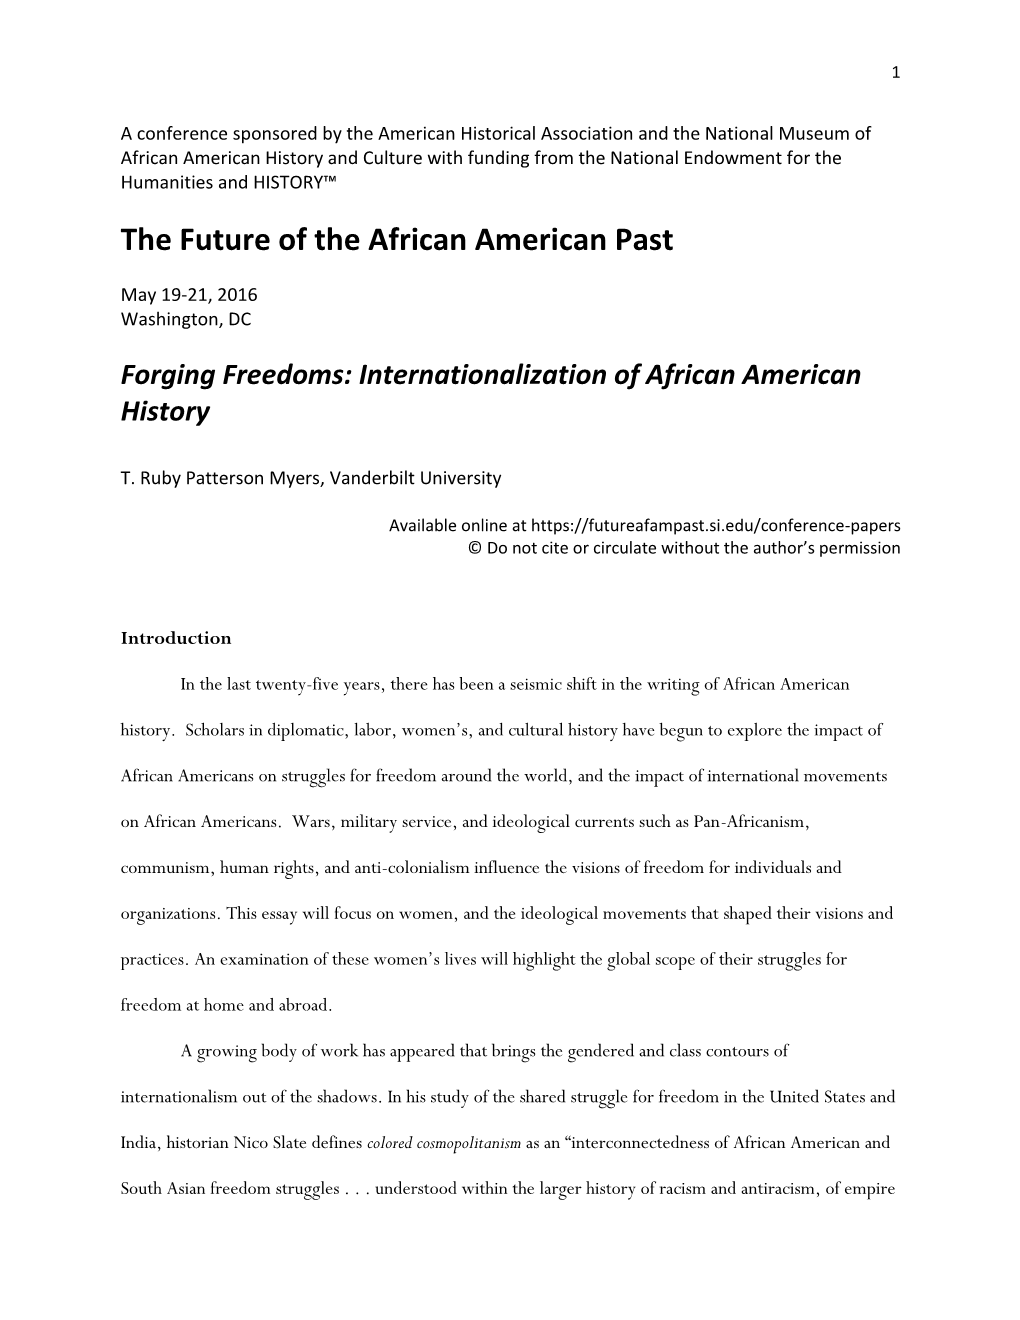 Internationalization of African American History